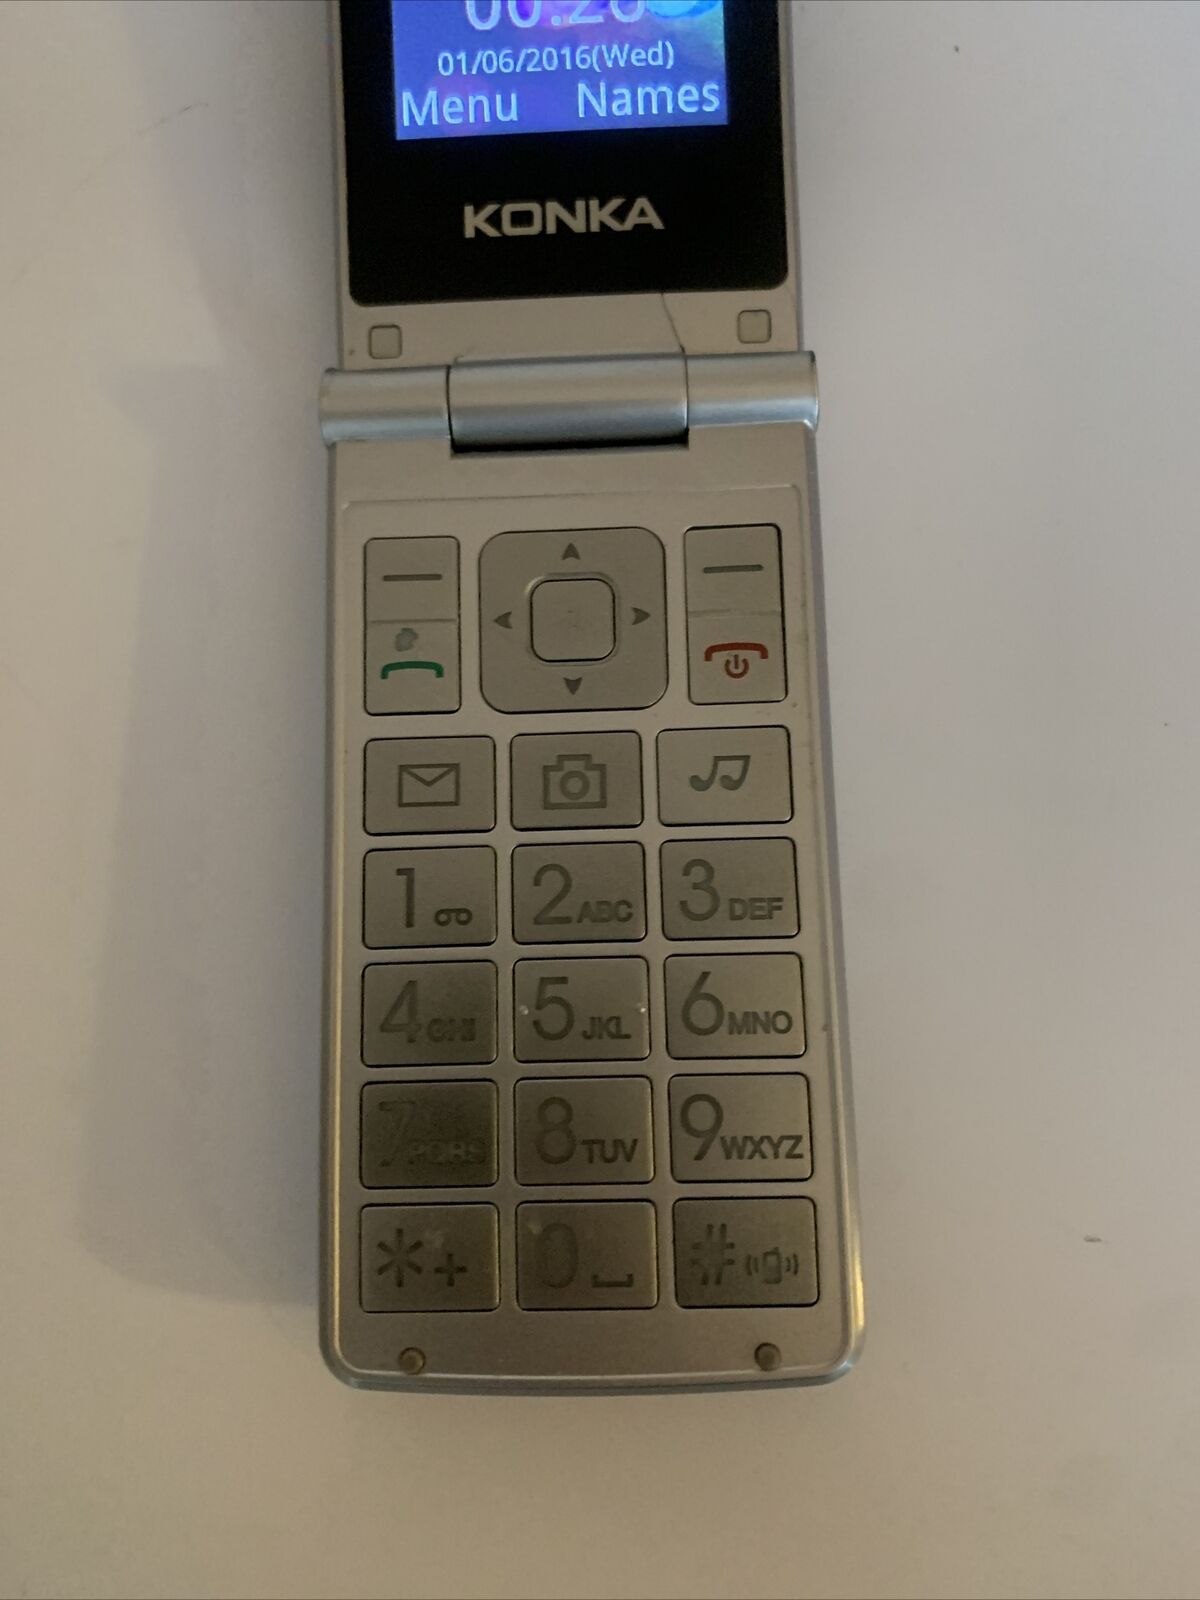 Konka U3 Handset Flip Mobile Phone